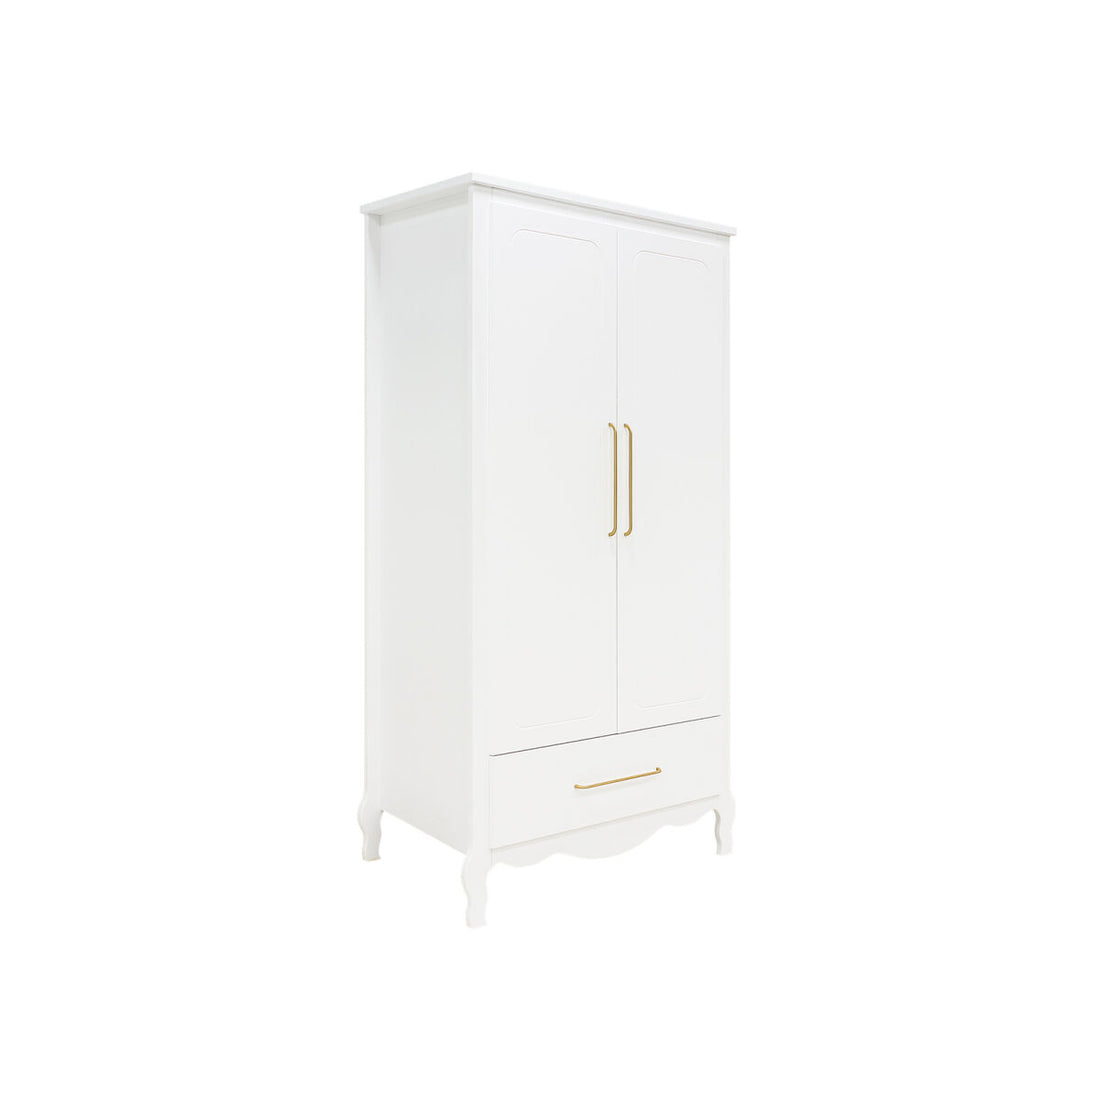 bopita-2-door-xl-wardrobe-with-drawer-elena-white-bopt-14613611- (3)